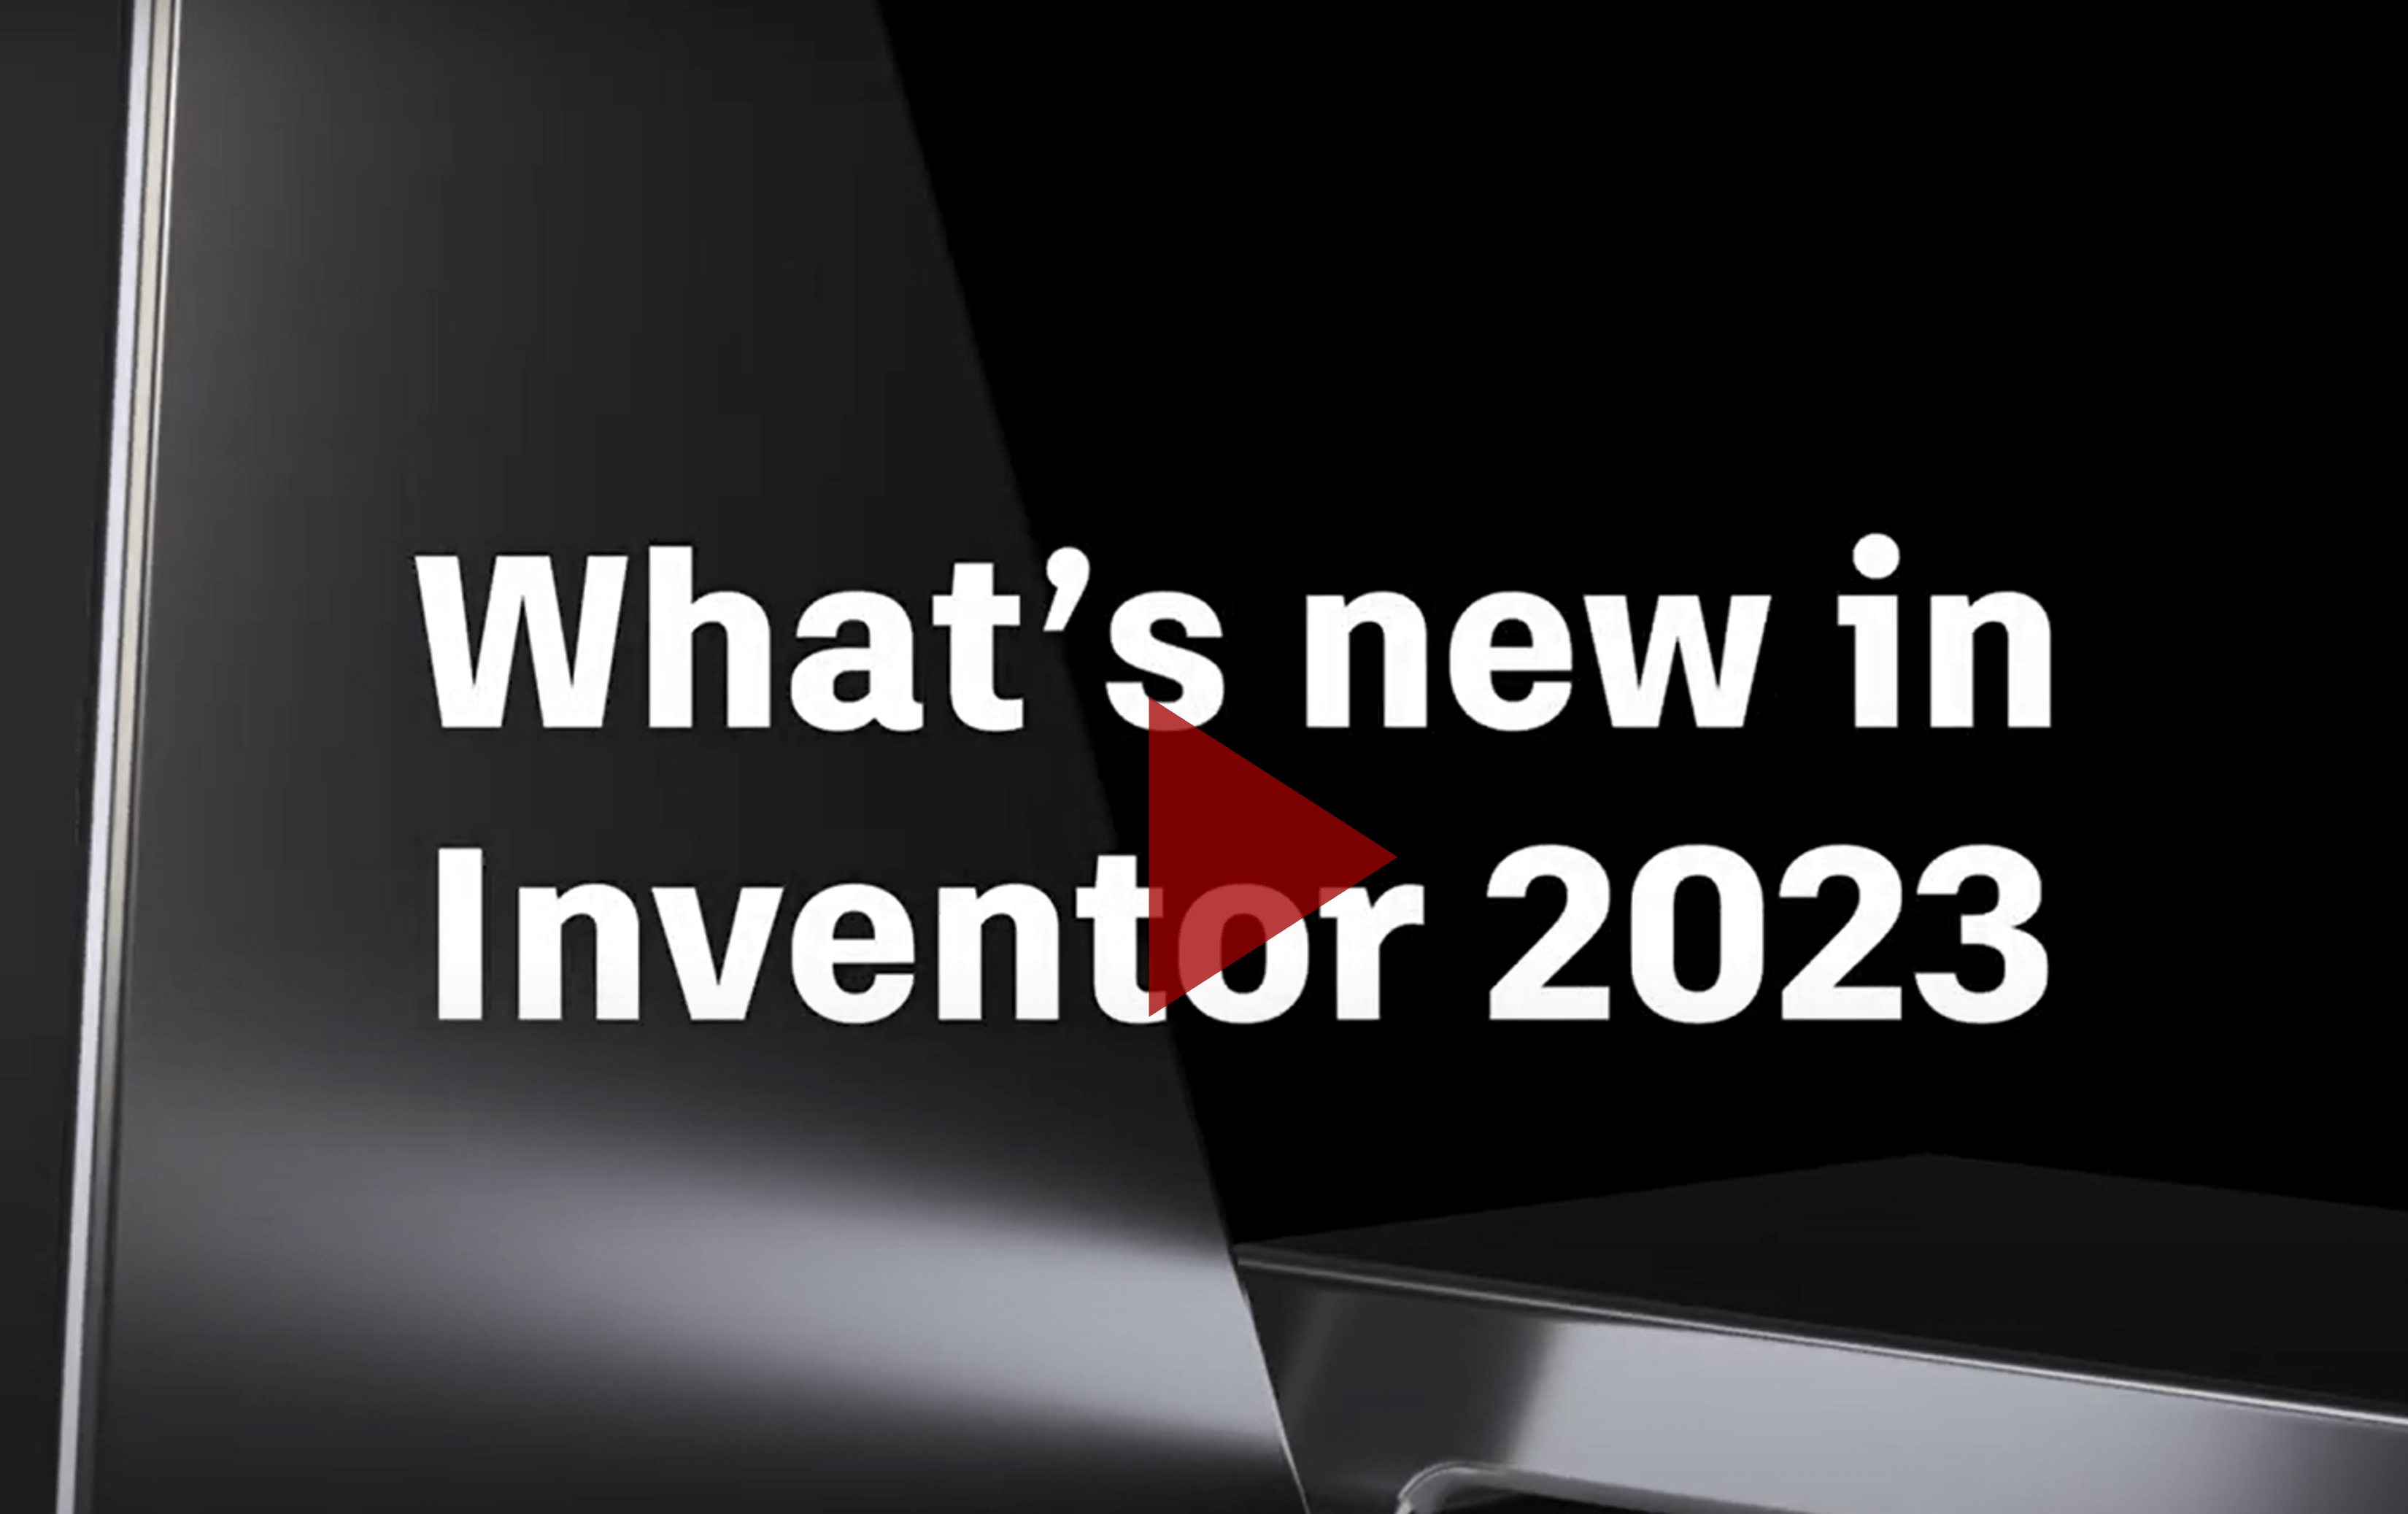 Inventor 2023